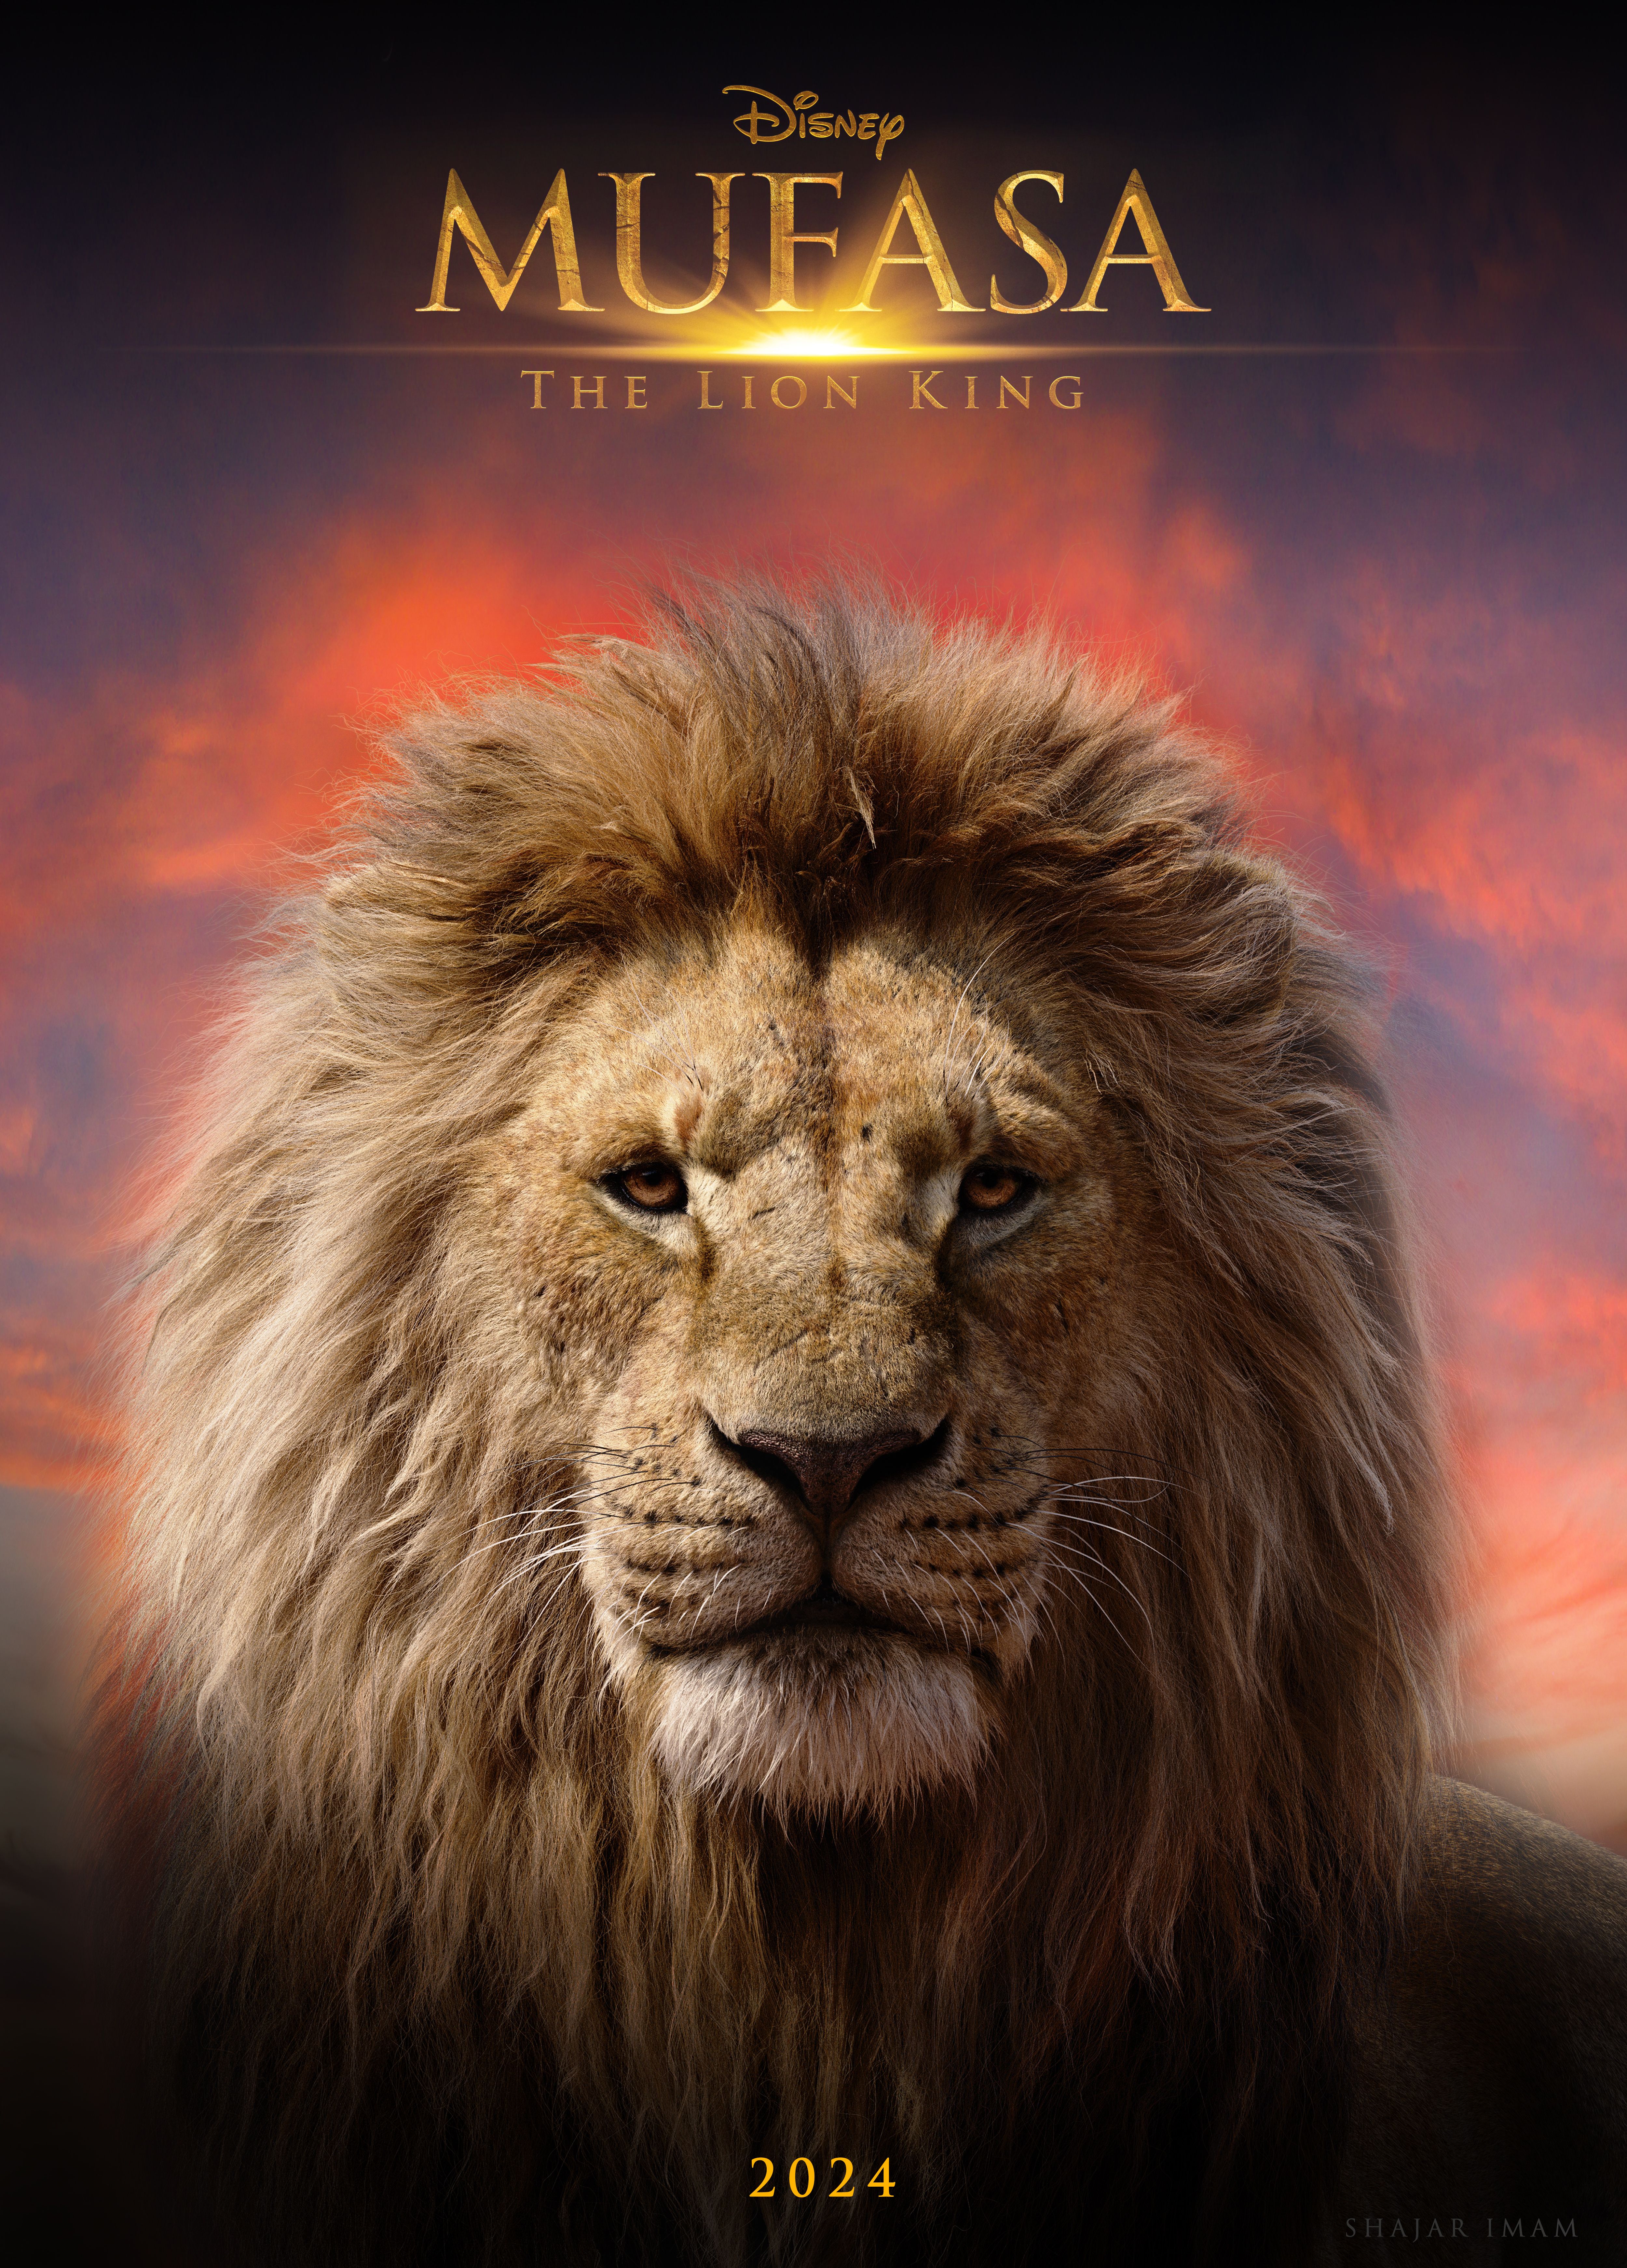 Mufasa: The Lion King Wallpaper 4K, 2024 Movies, Disney, 5K, Movies